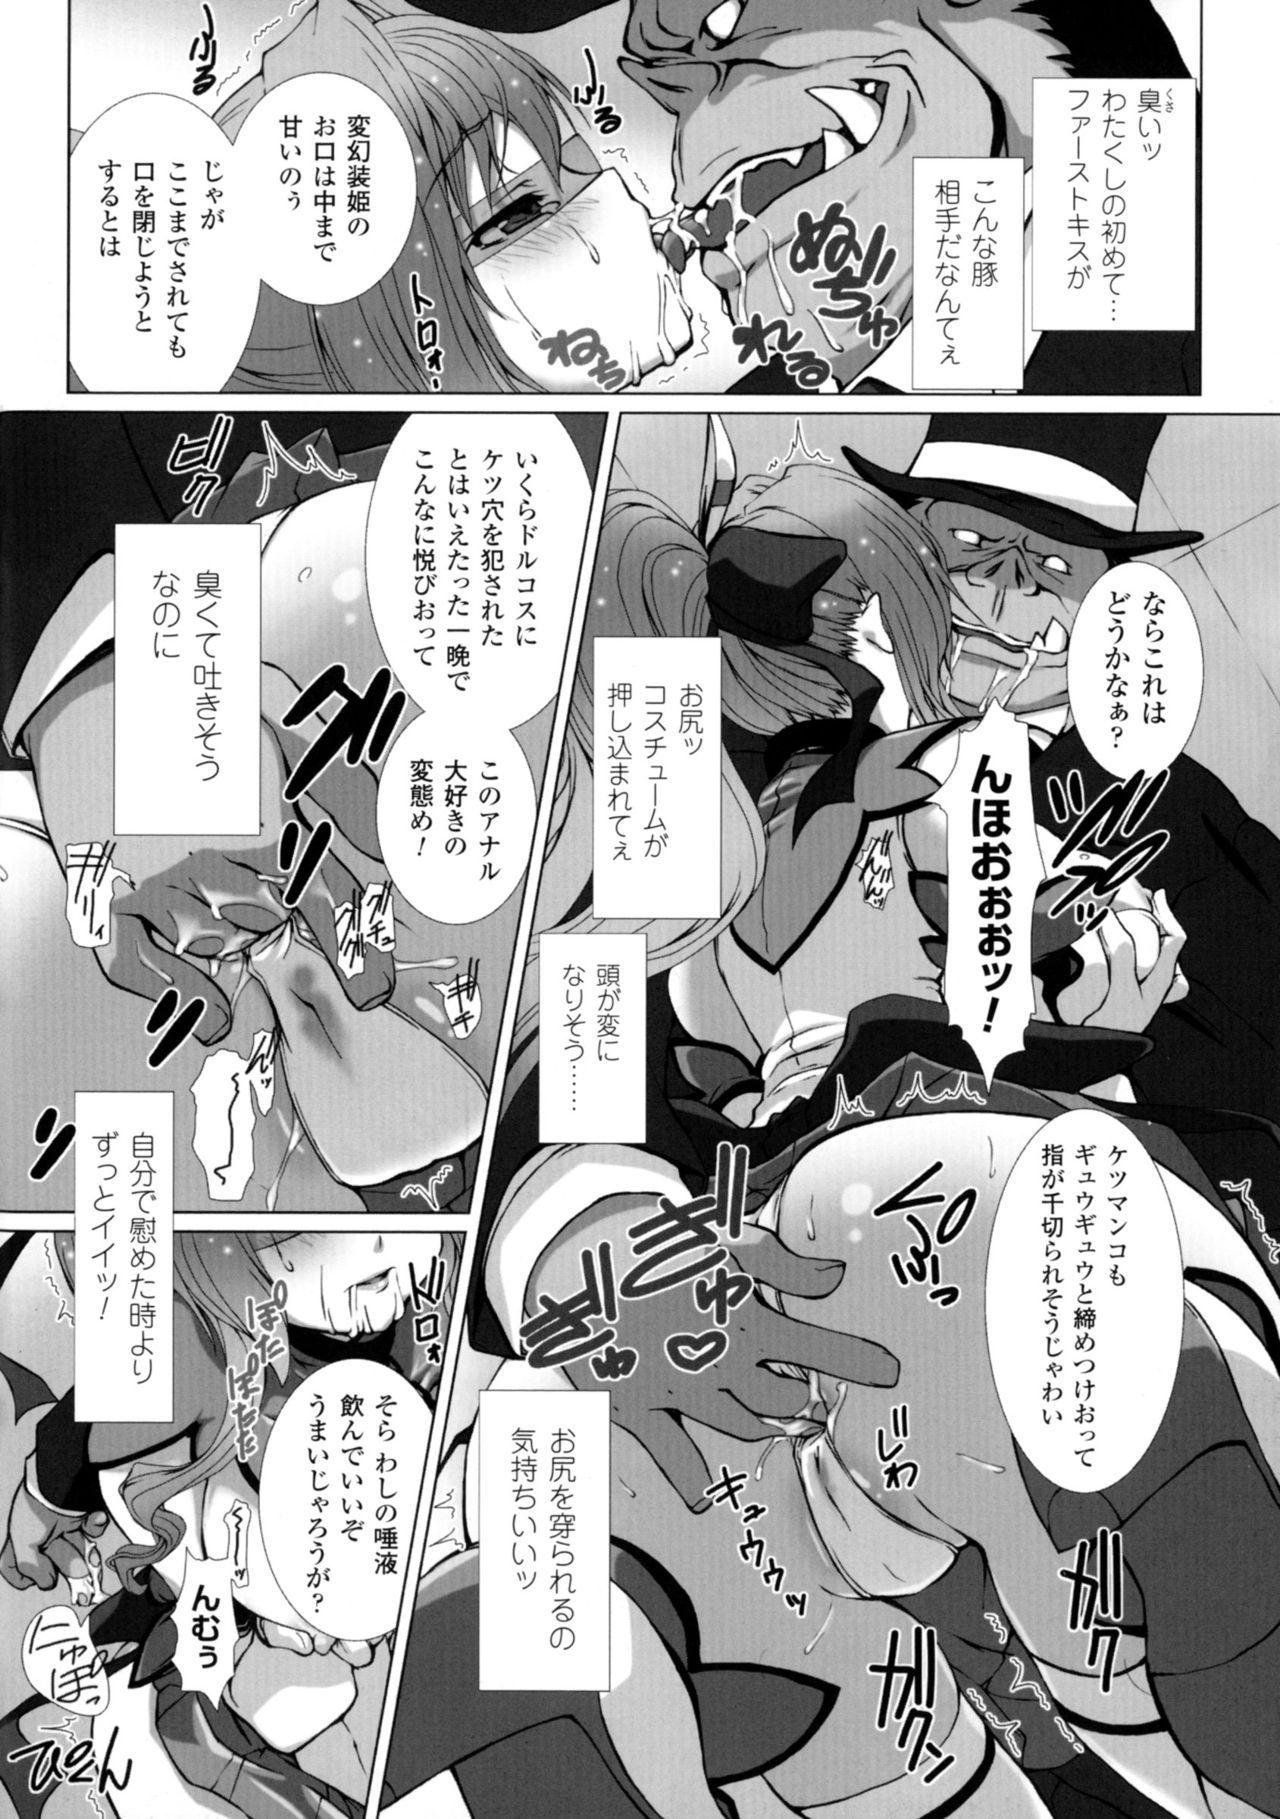 Seigi no Heroine Kangoku File DX Vol. 4 29